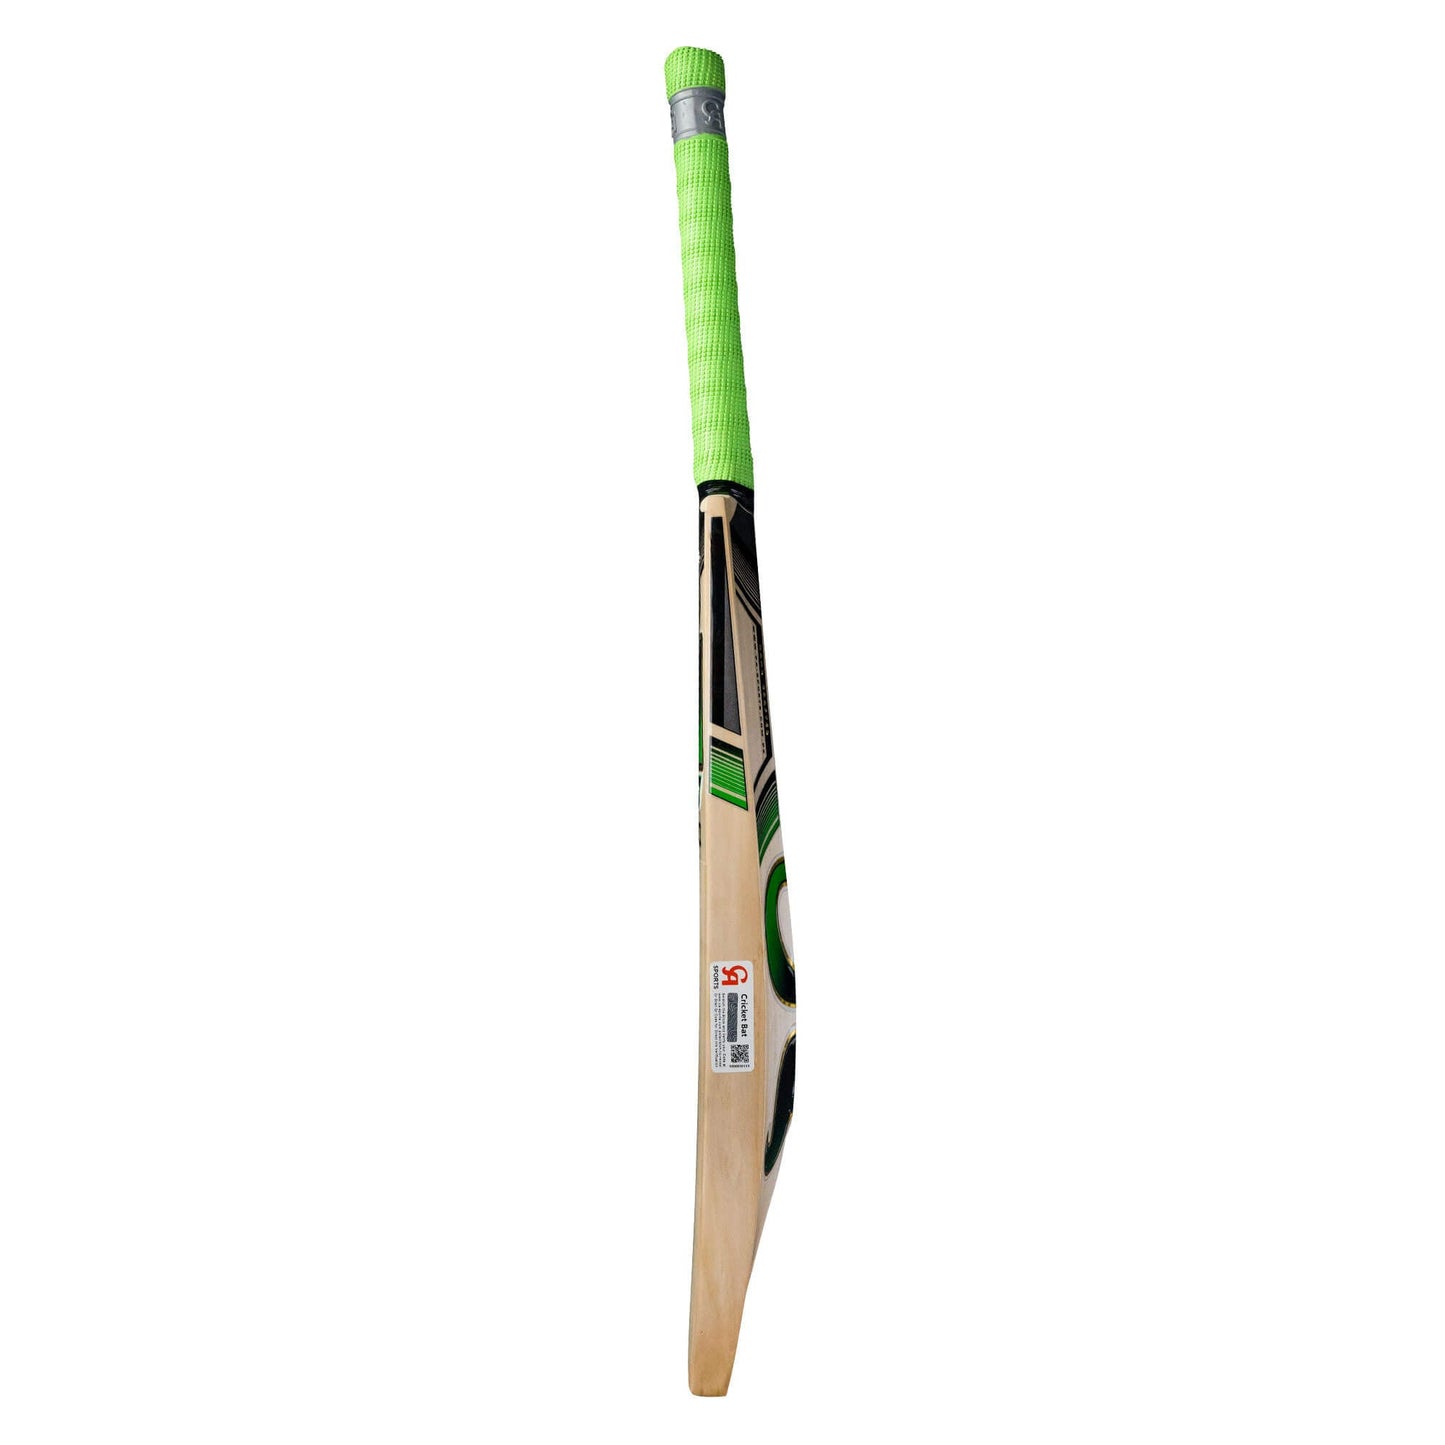 CA PRO 15000 English Willow Cricket Bat - SH